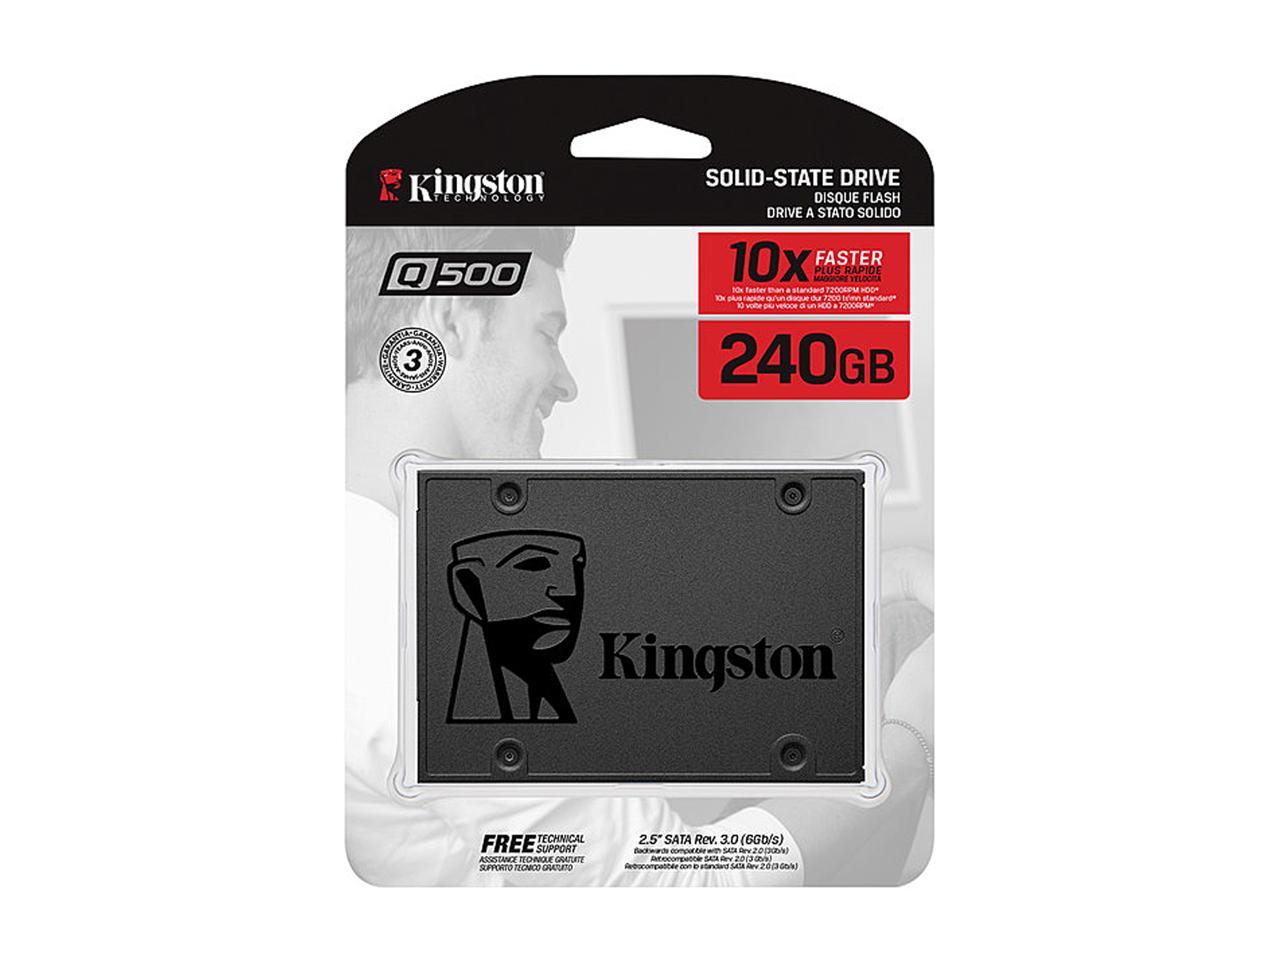 Kingston Q500 240 Gb Solid State Drive - 2.5